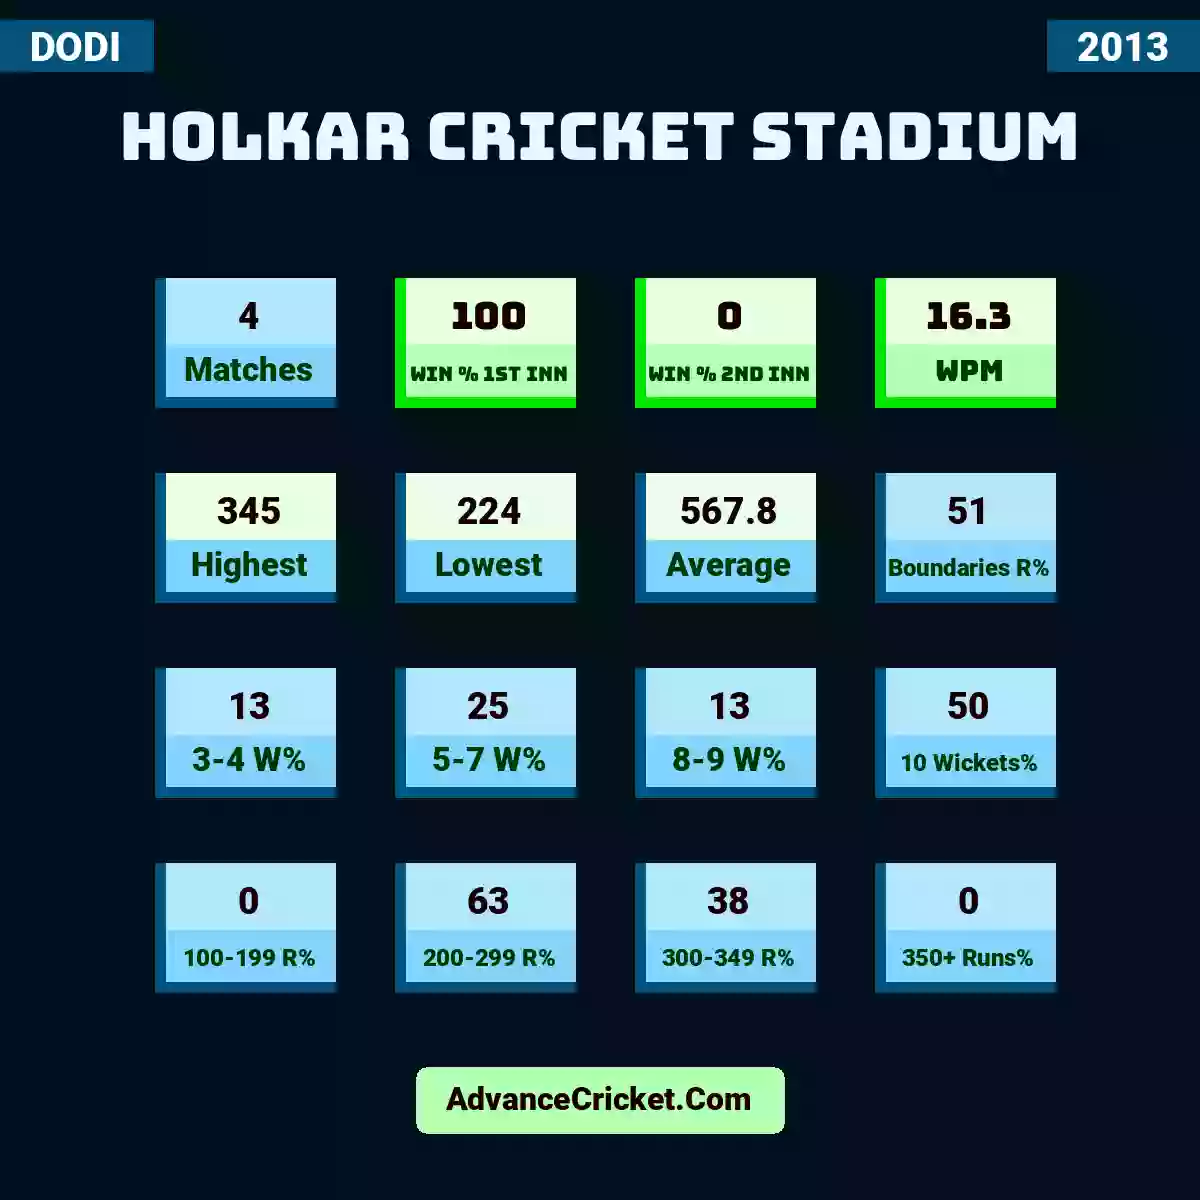 Image showing Holkar Cricket Stadium with Matches: 4, Win % 1st Inn: 100, Win % 2nd Inn: 0, WPM: 16.3, Highest: 345, Lowest: 224, Average: 567.8, Boundaries R%: 51, 3-4 W%: 13, 5-7 W%: 25, 8-9 W%: 13, 10 Wickets%: 50, 100-199 R%: 0, 200-299 R%: 63, 300-349 R%: 38, 350+ Runs%: 0.